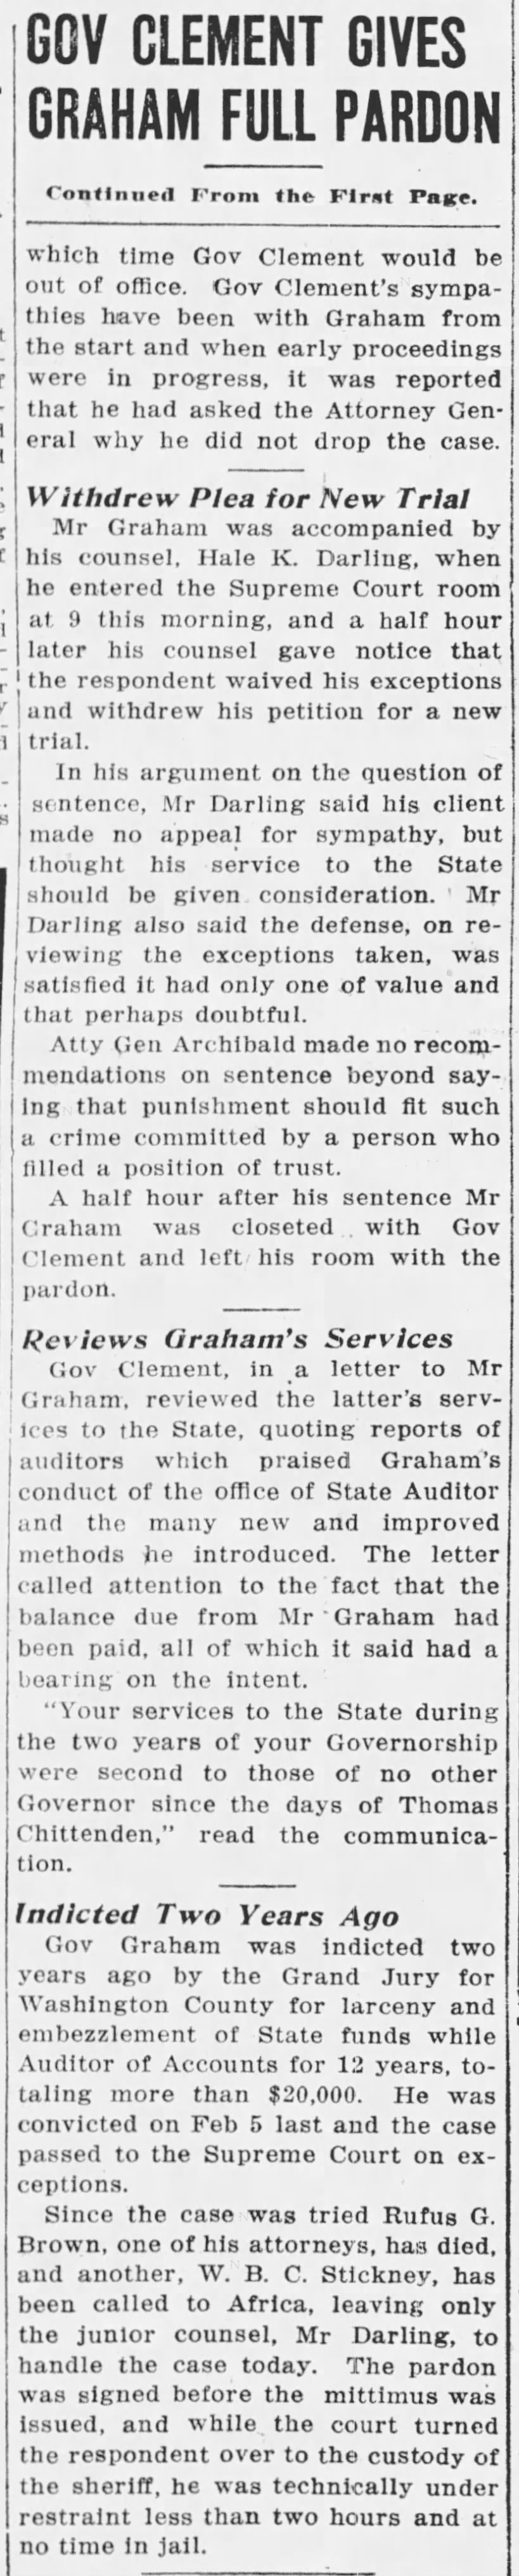 Gov. Clement Gives Graham Full Pardon (part 2)